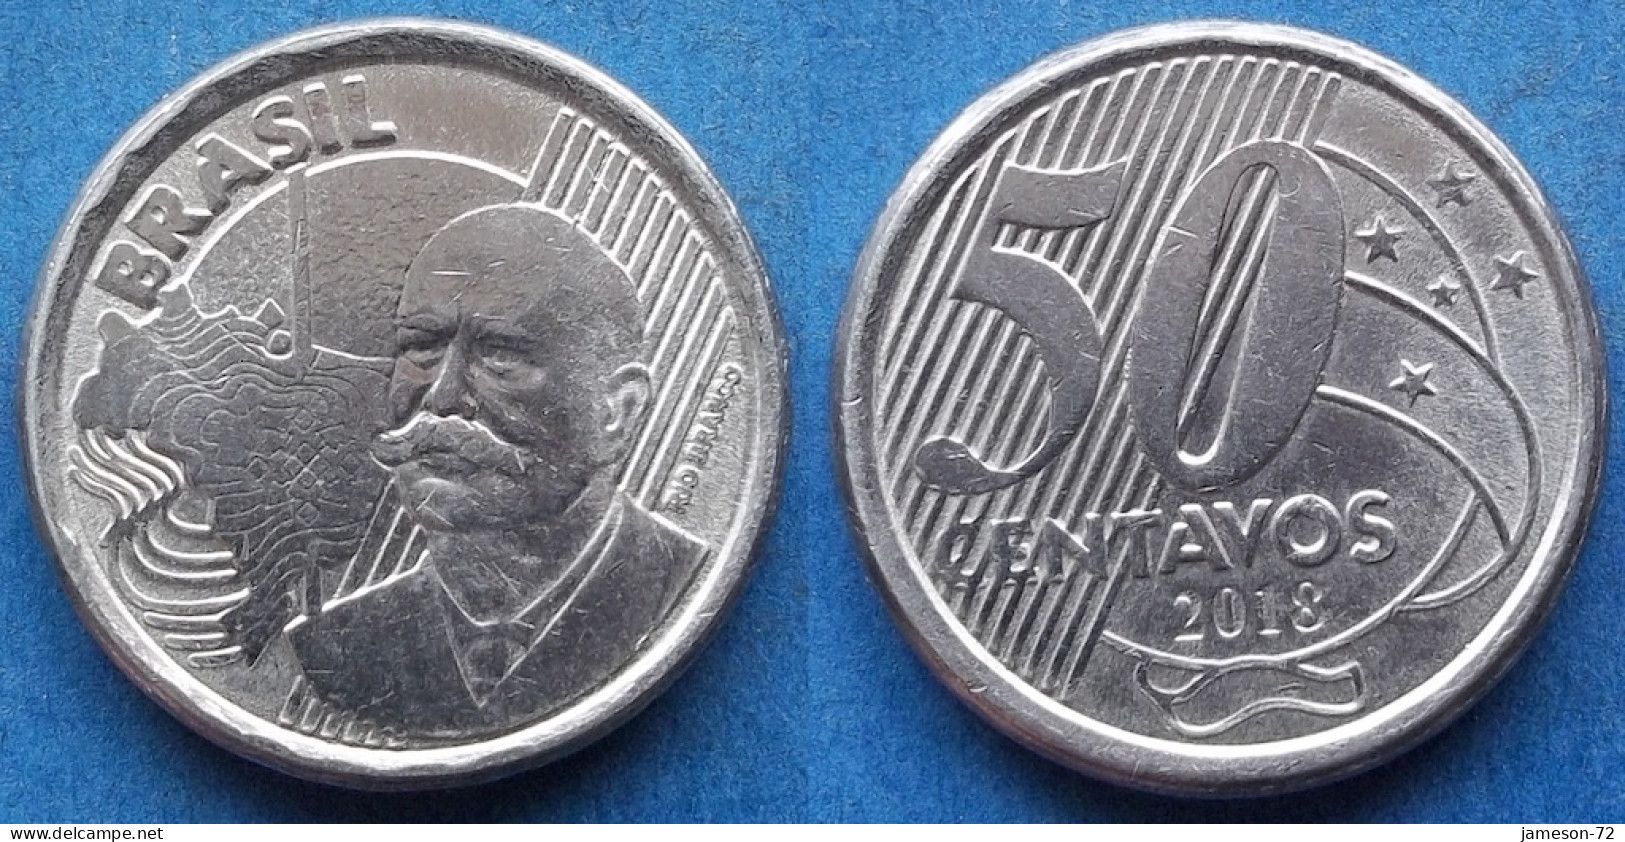 BRAZIL - 50 Centavos 2018 "Baron Of Rio Branco" KM# 651a Monetary Reform (1994) - Edelweiss Coins - Brésil